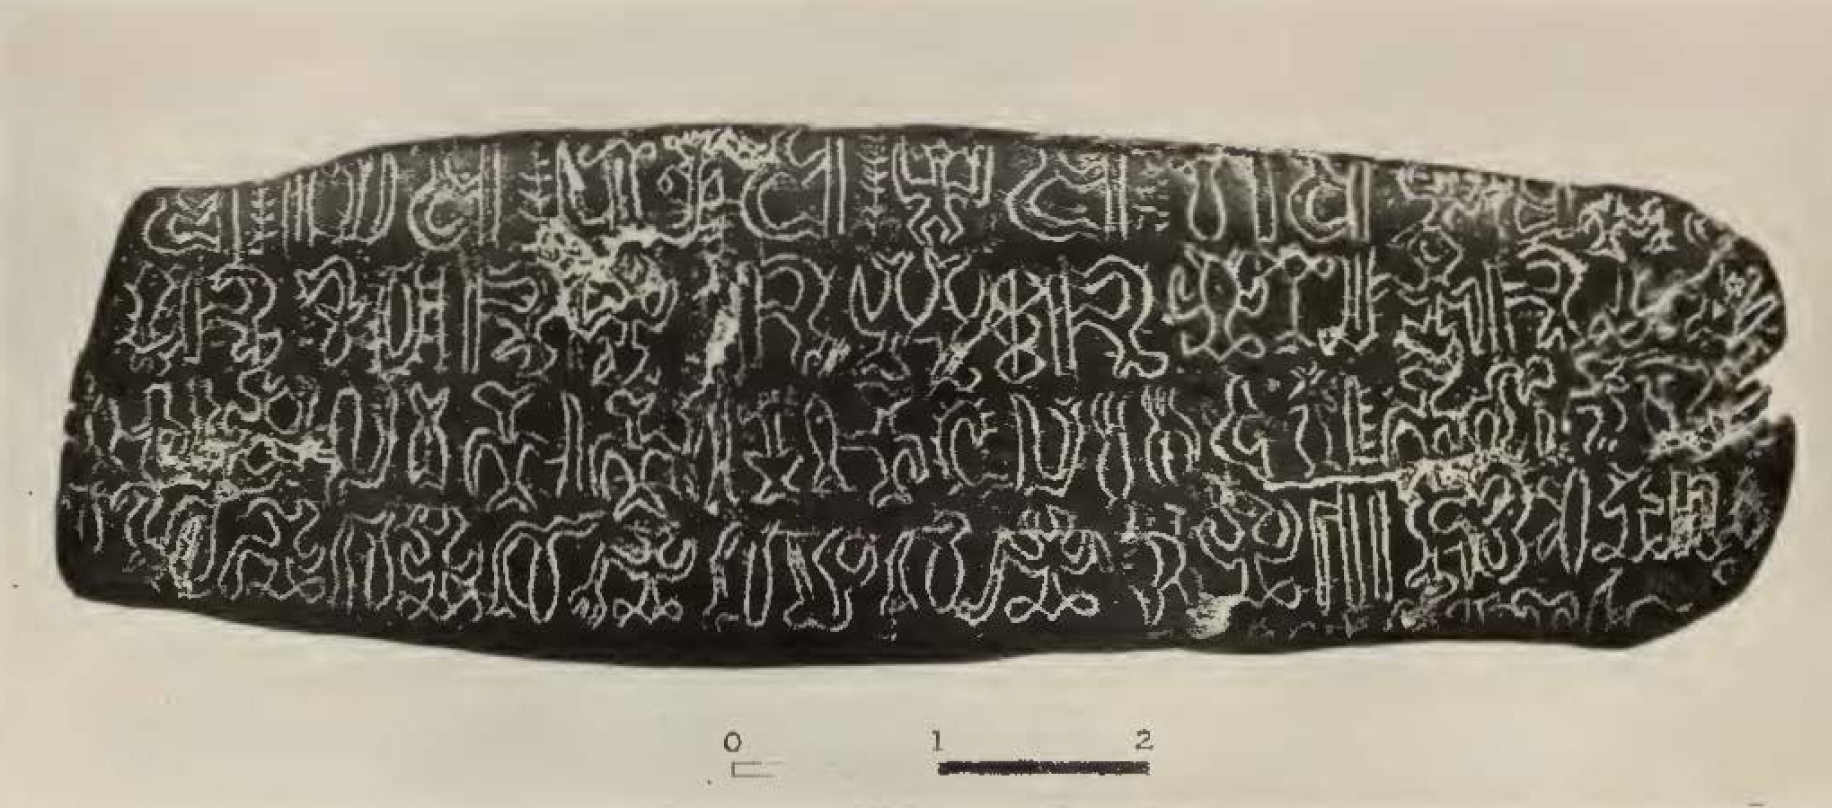 stone tablet witih inscriptions